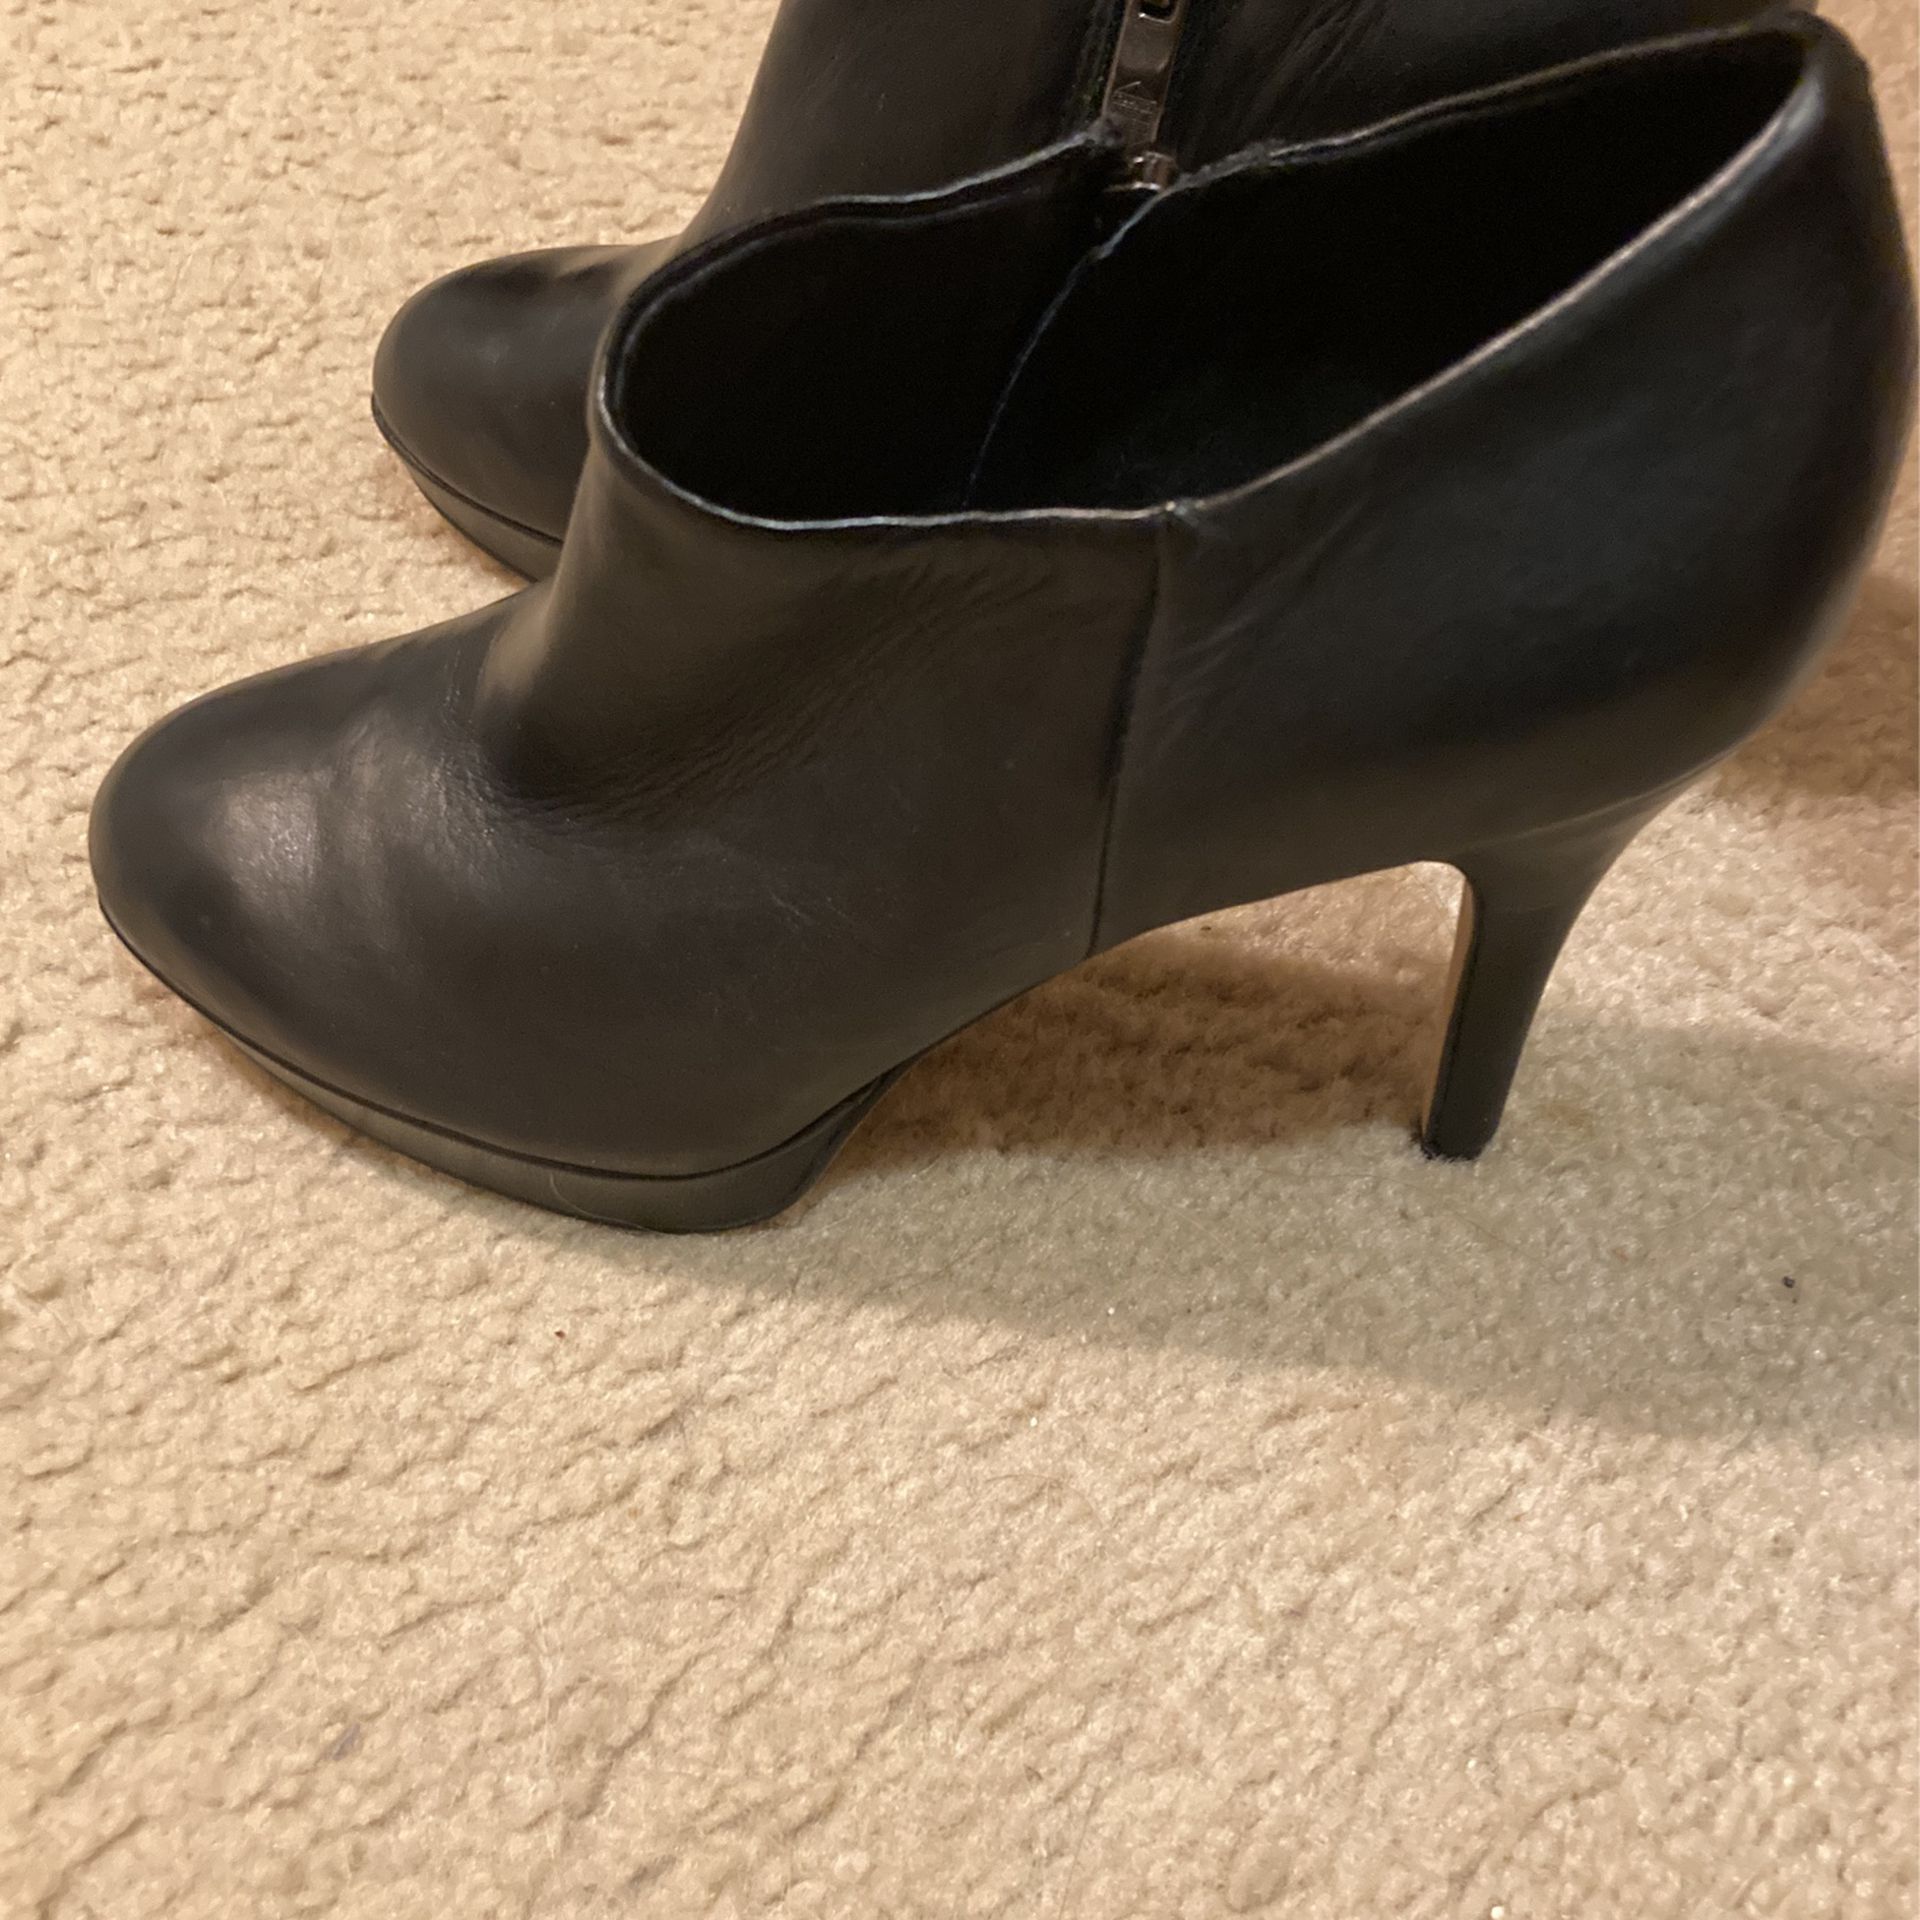 Size 7.5 Black Boots